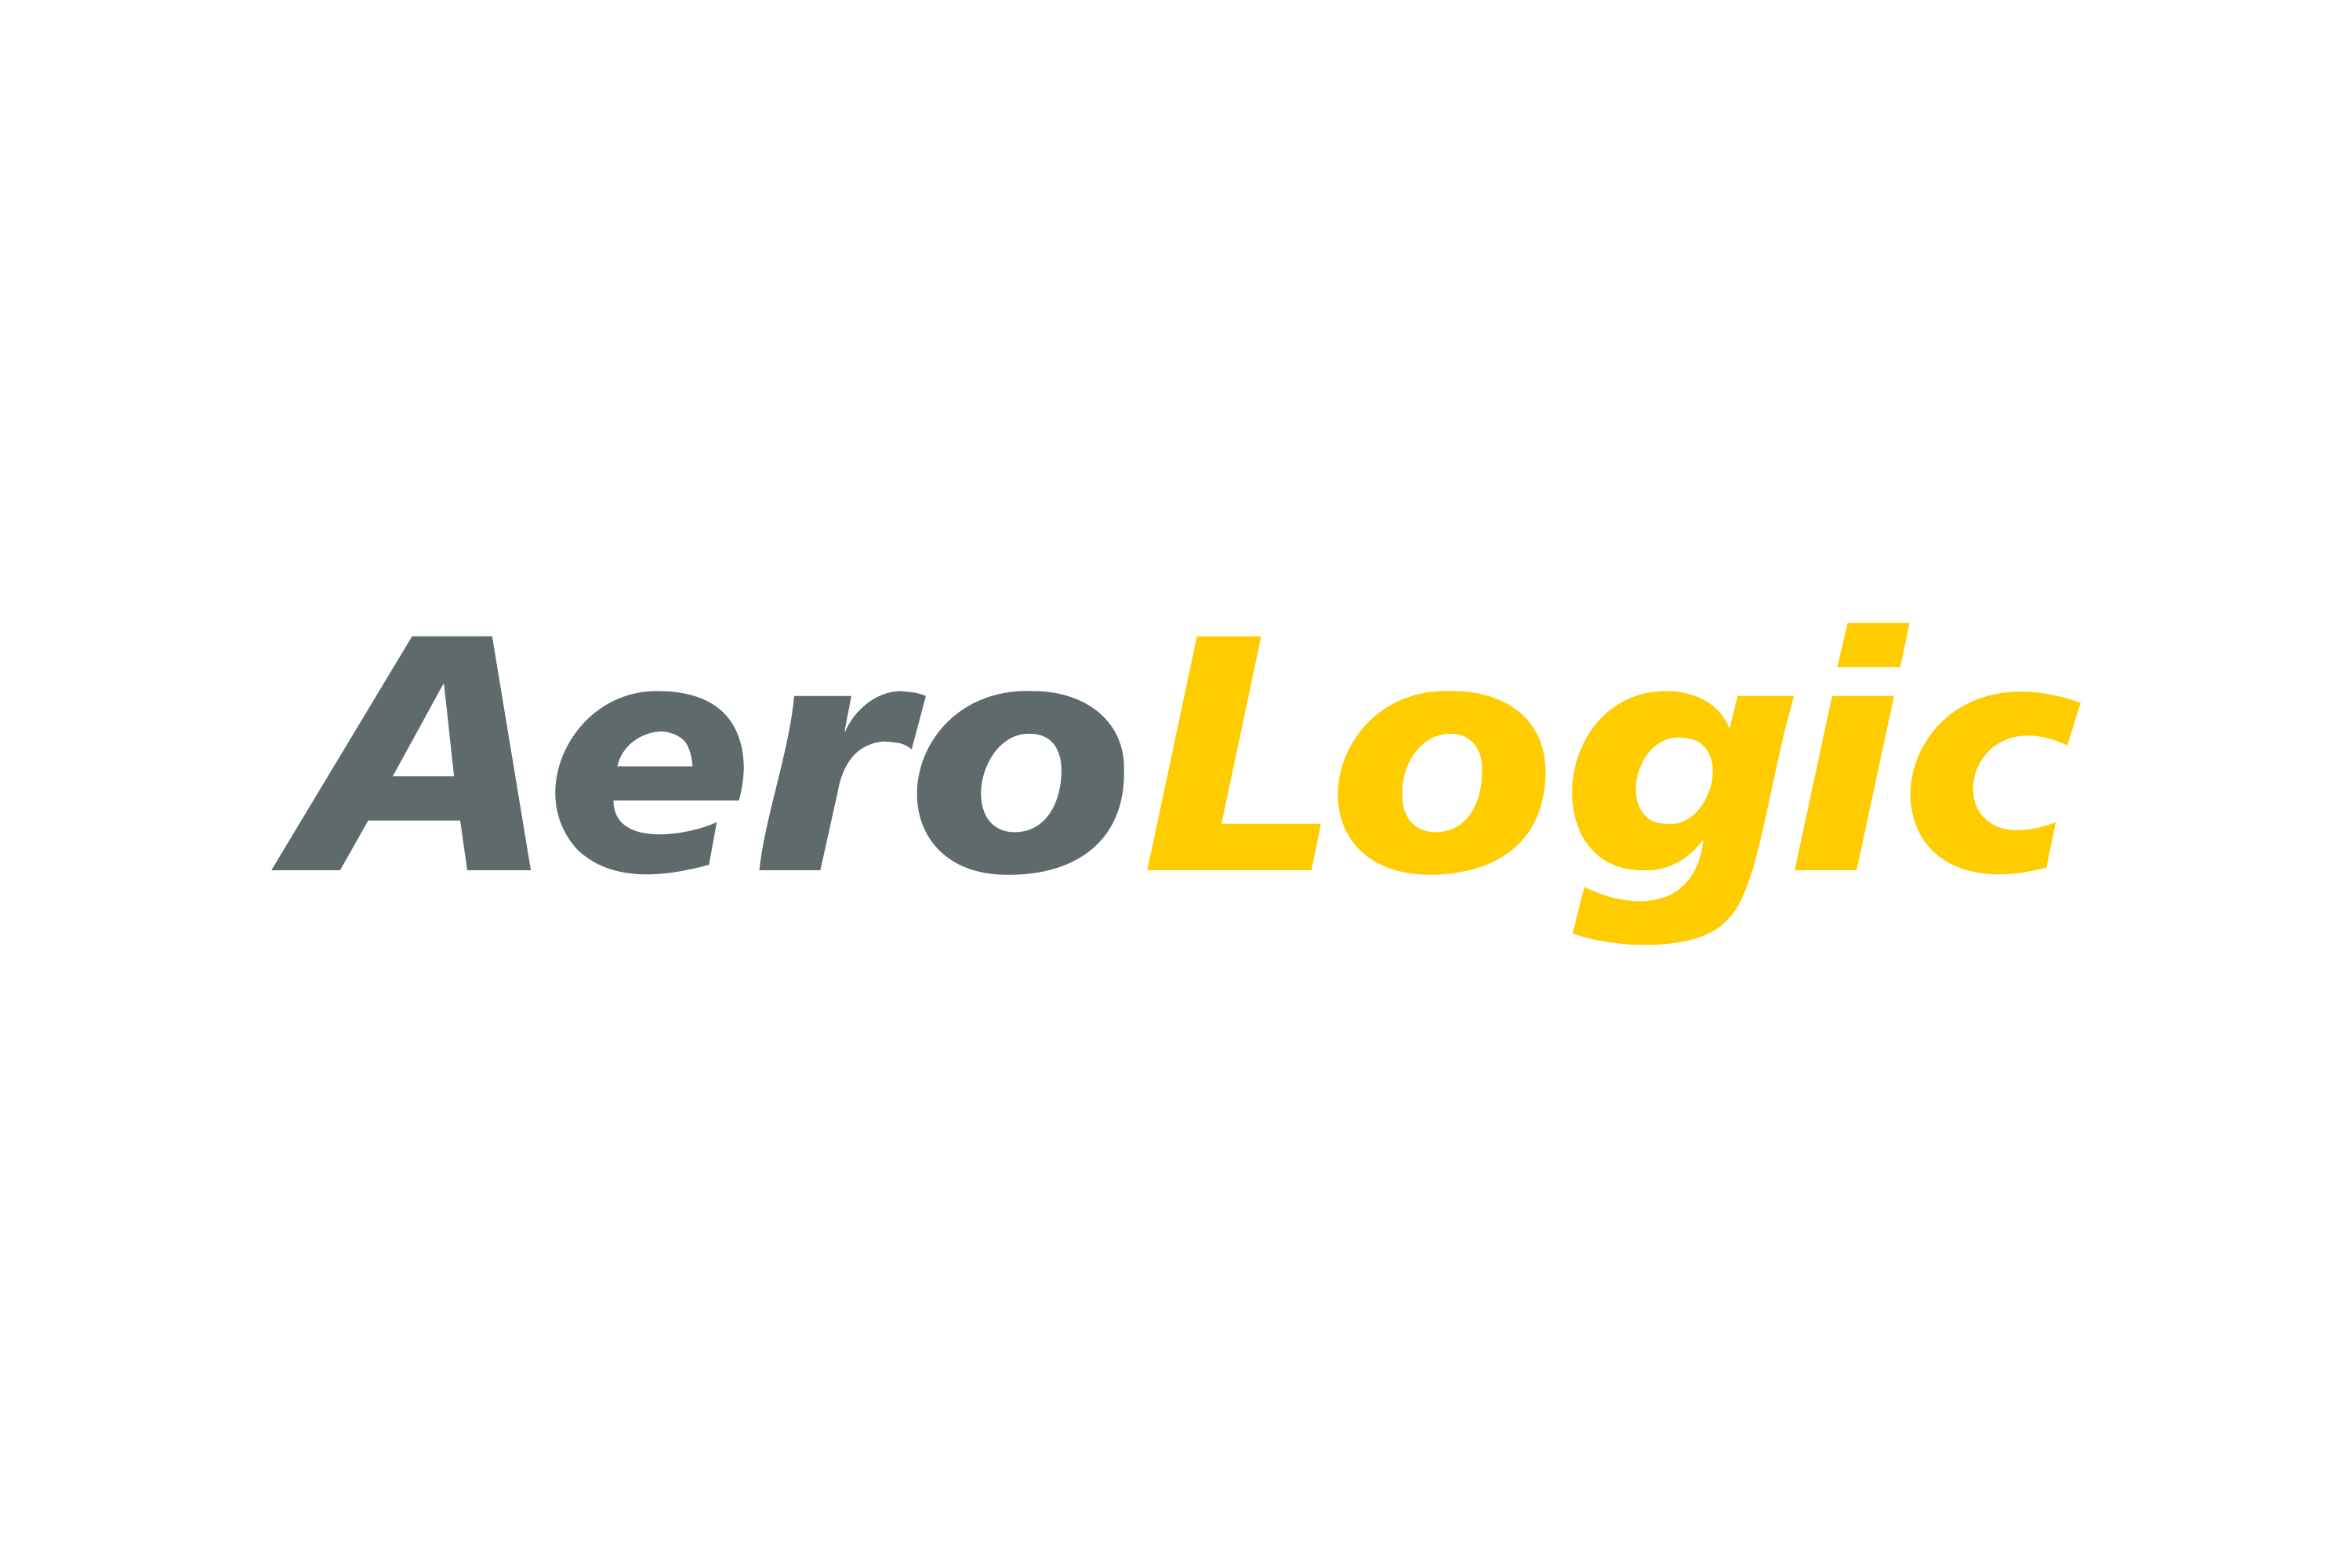 逻辑航空 AeroLogic